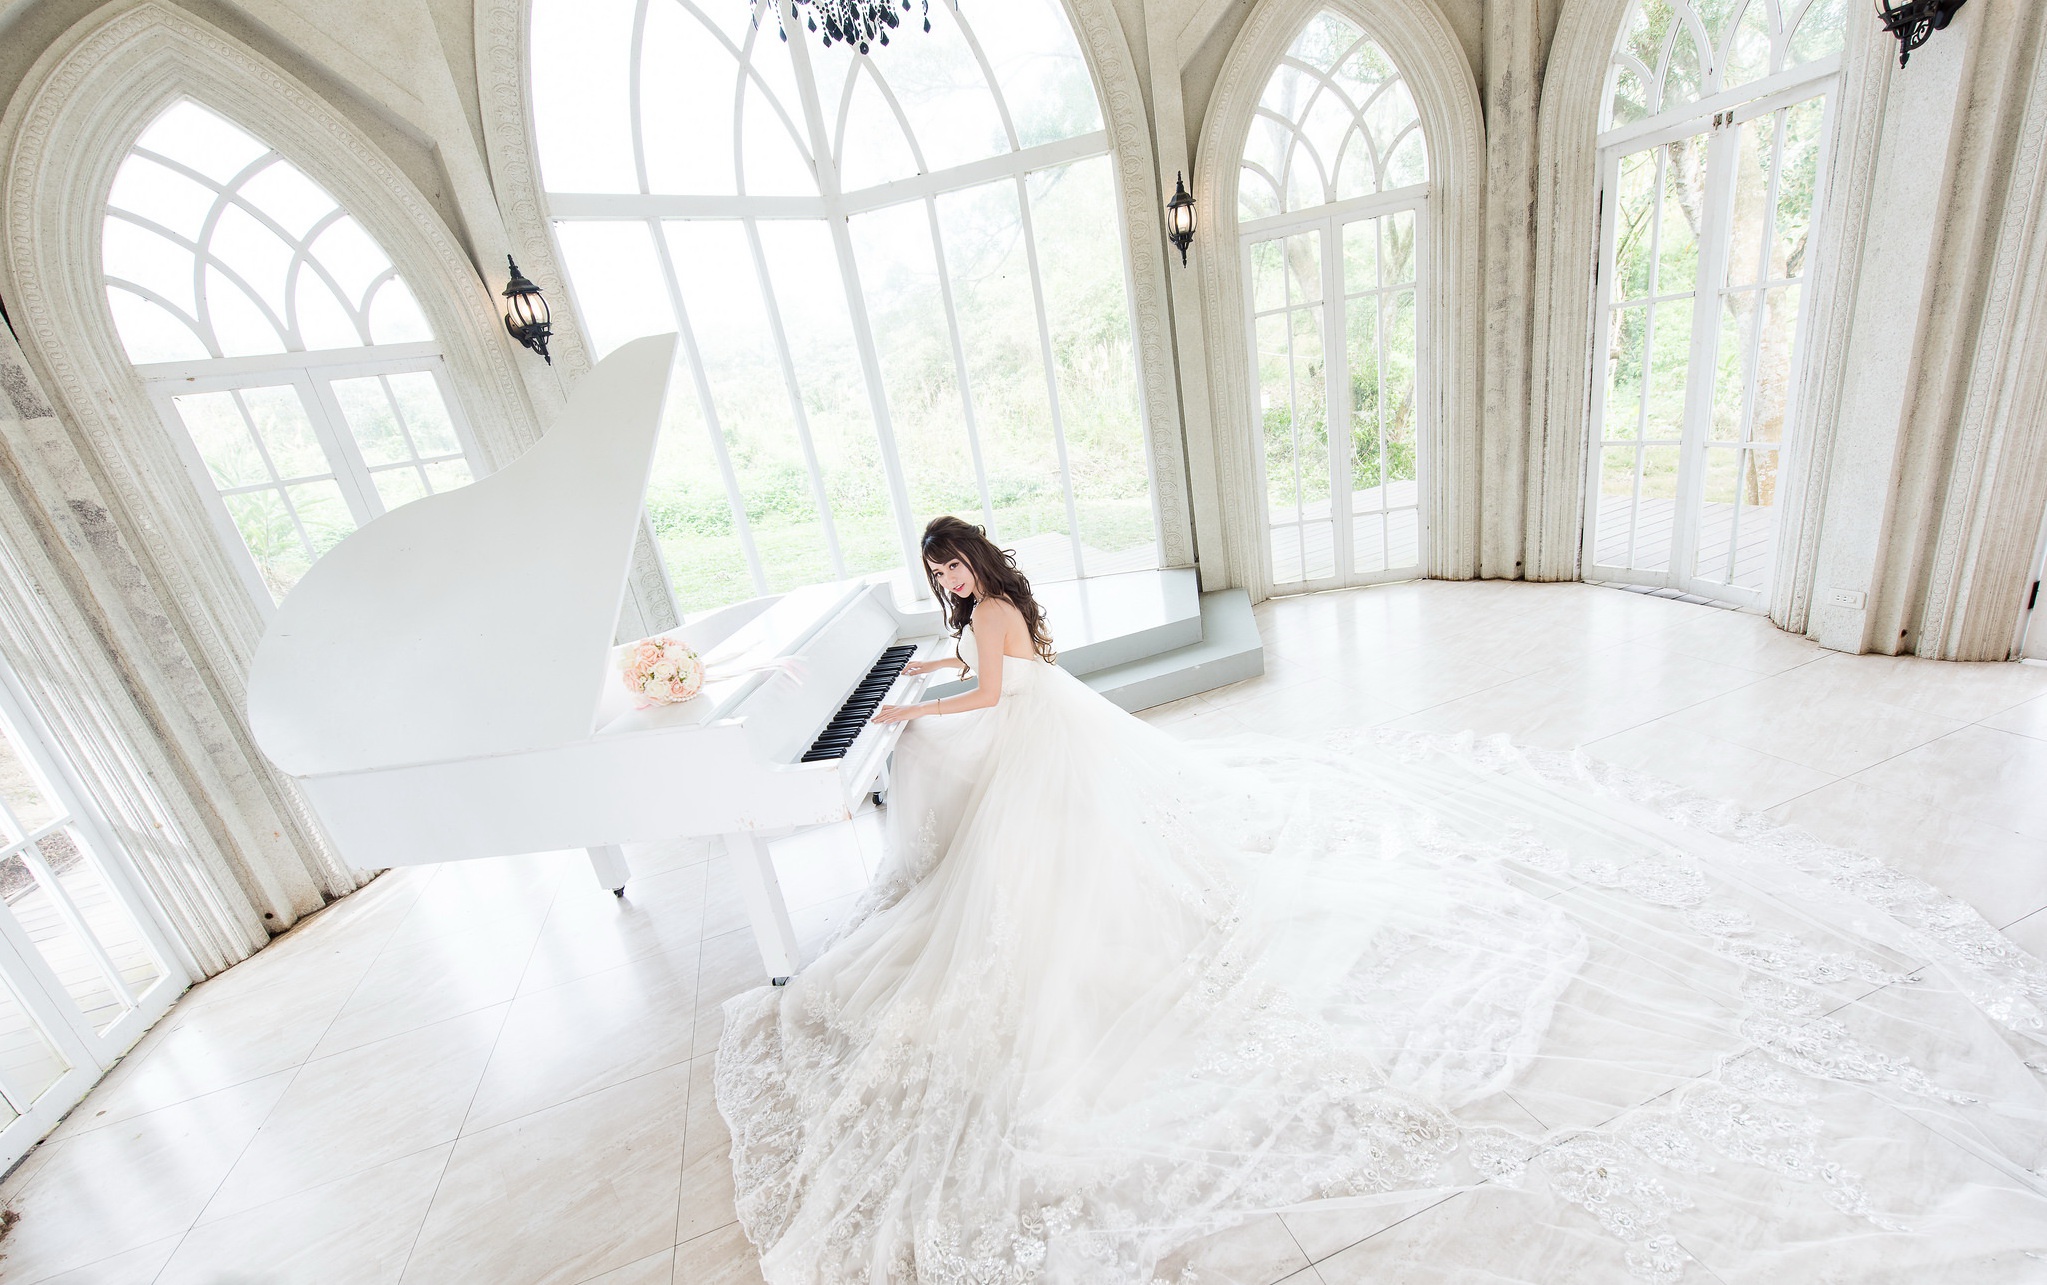 Asian Wedding Dress White Dress Piano Instrument 2047x1285